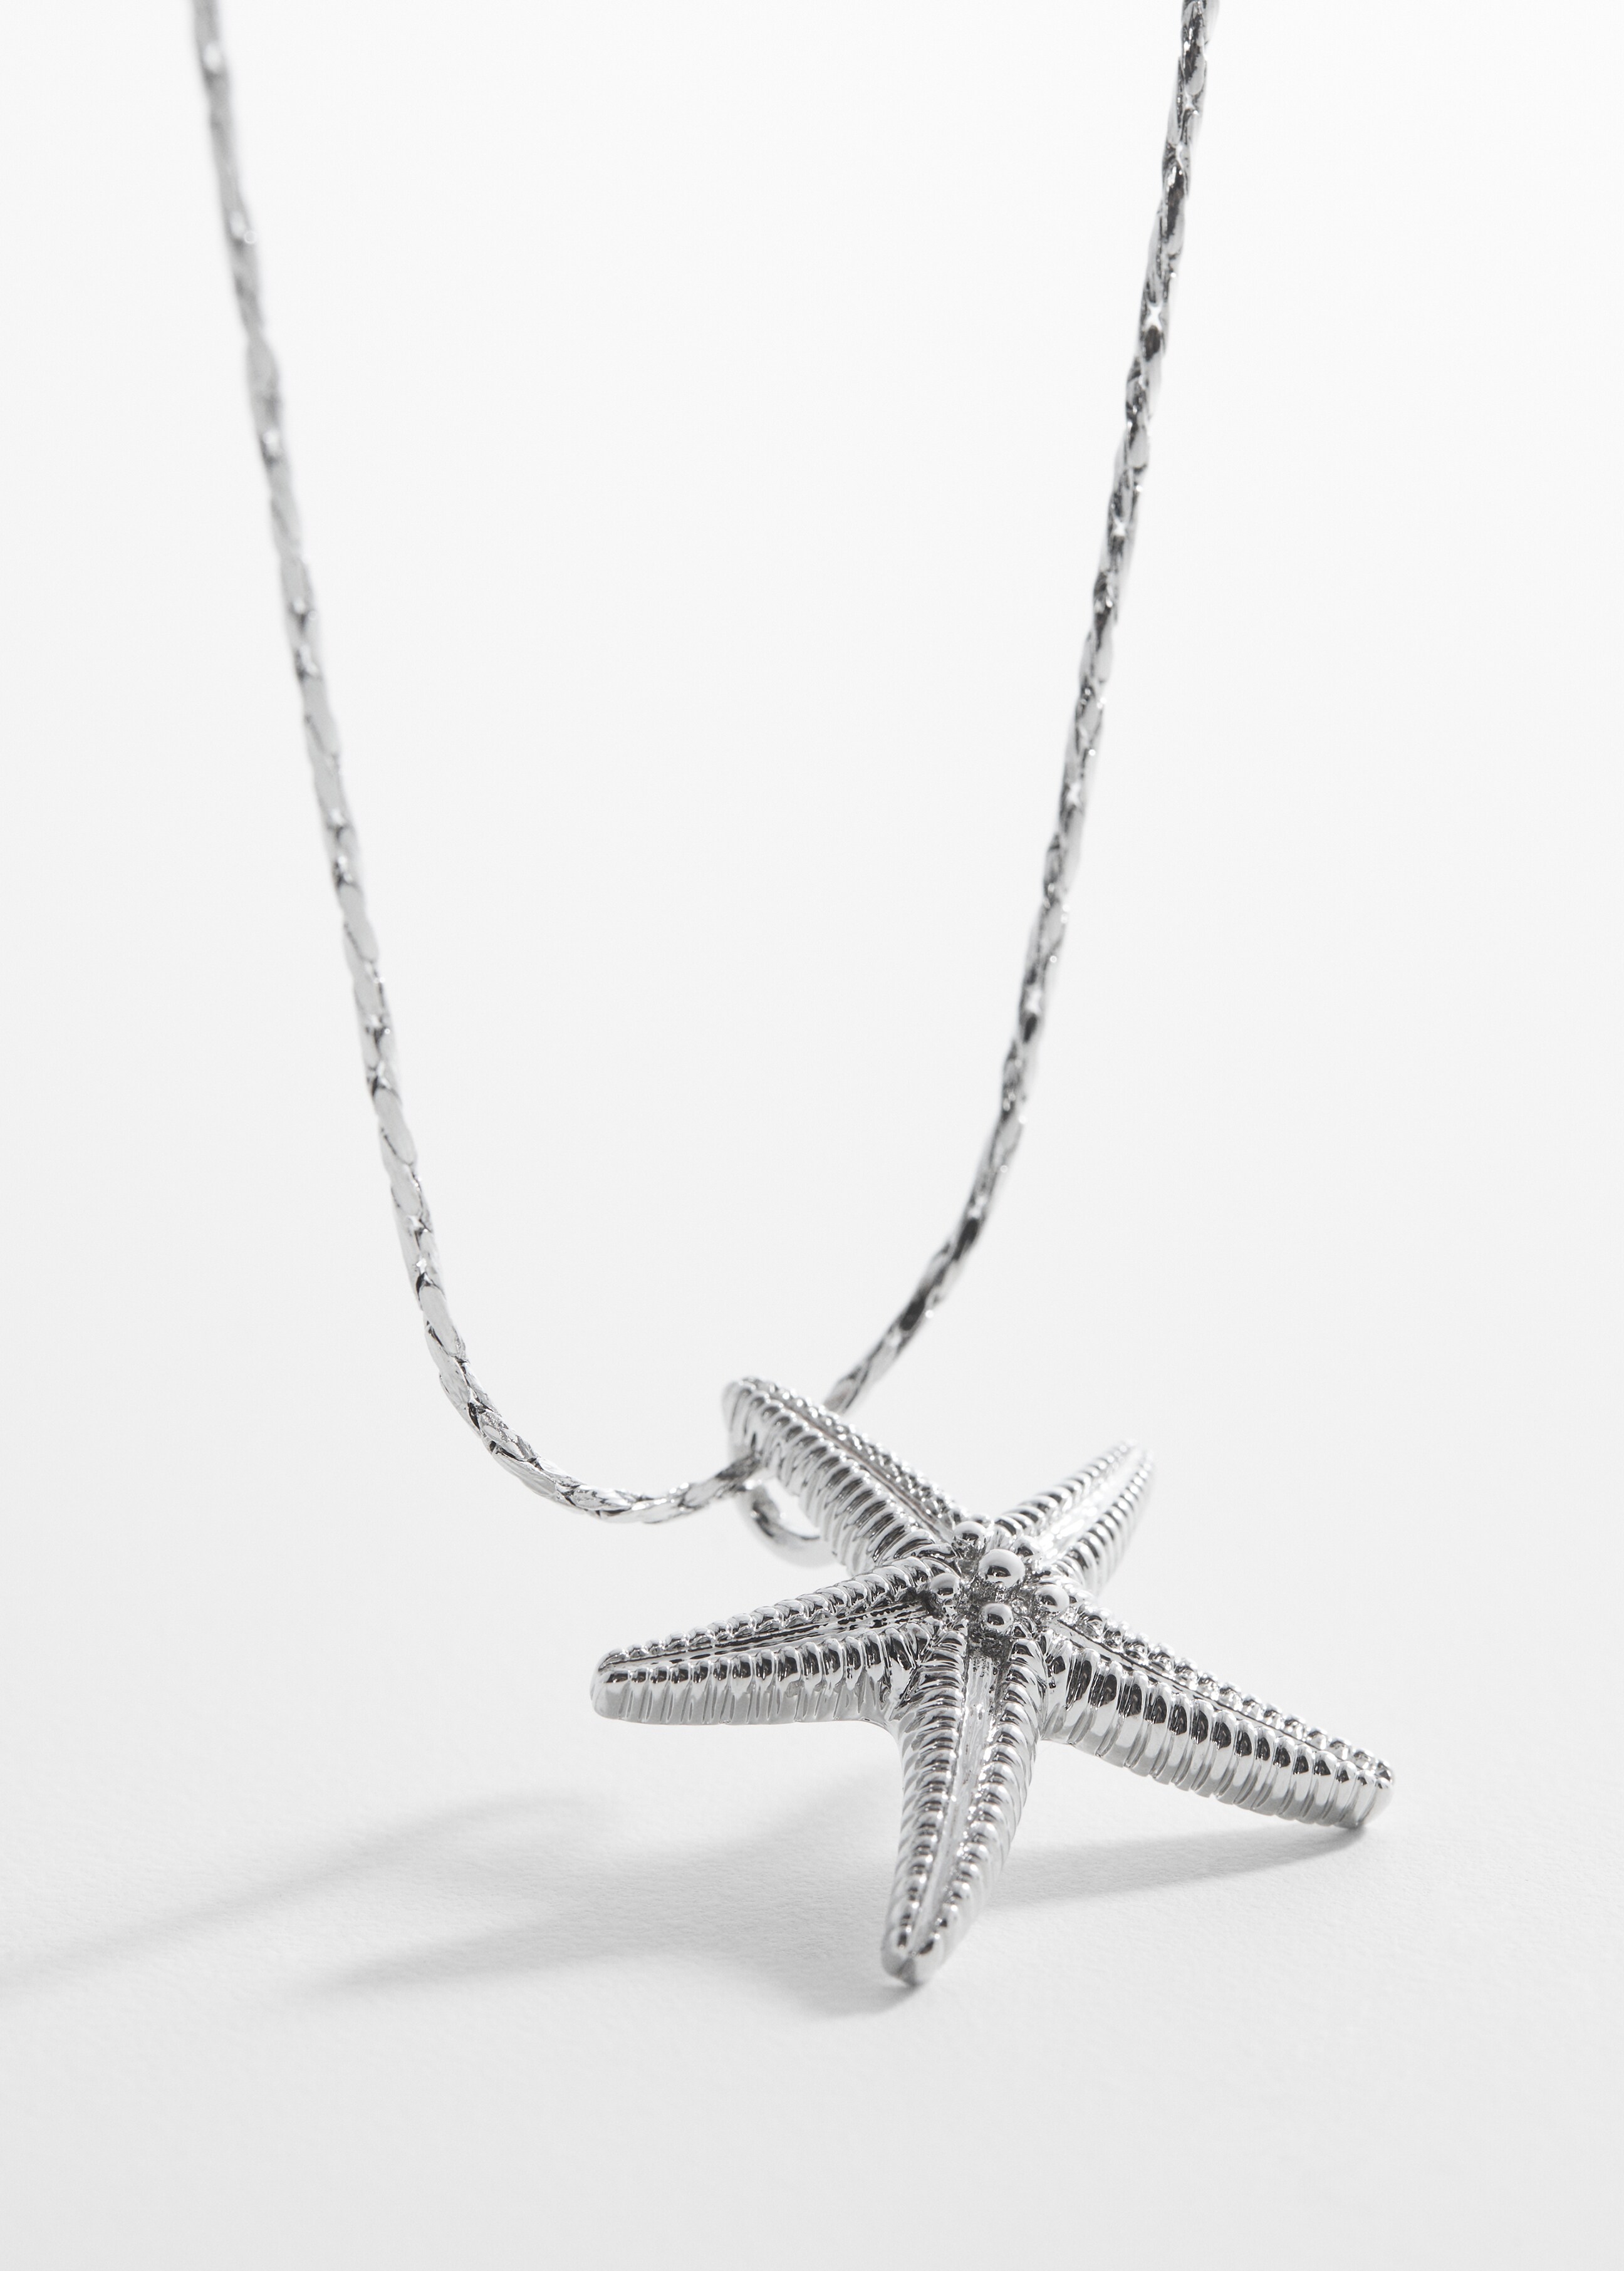 Star pendant necklace - Medium plane